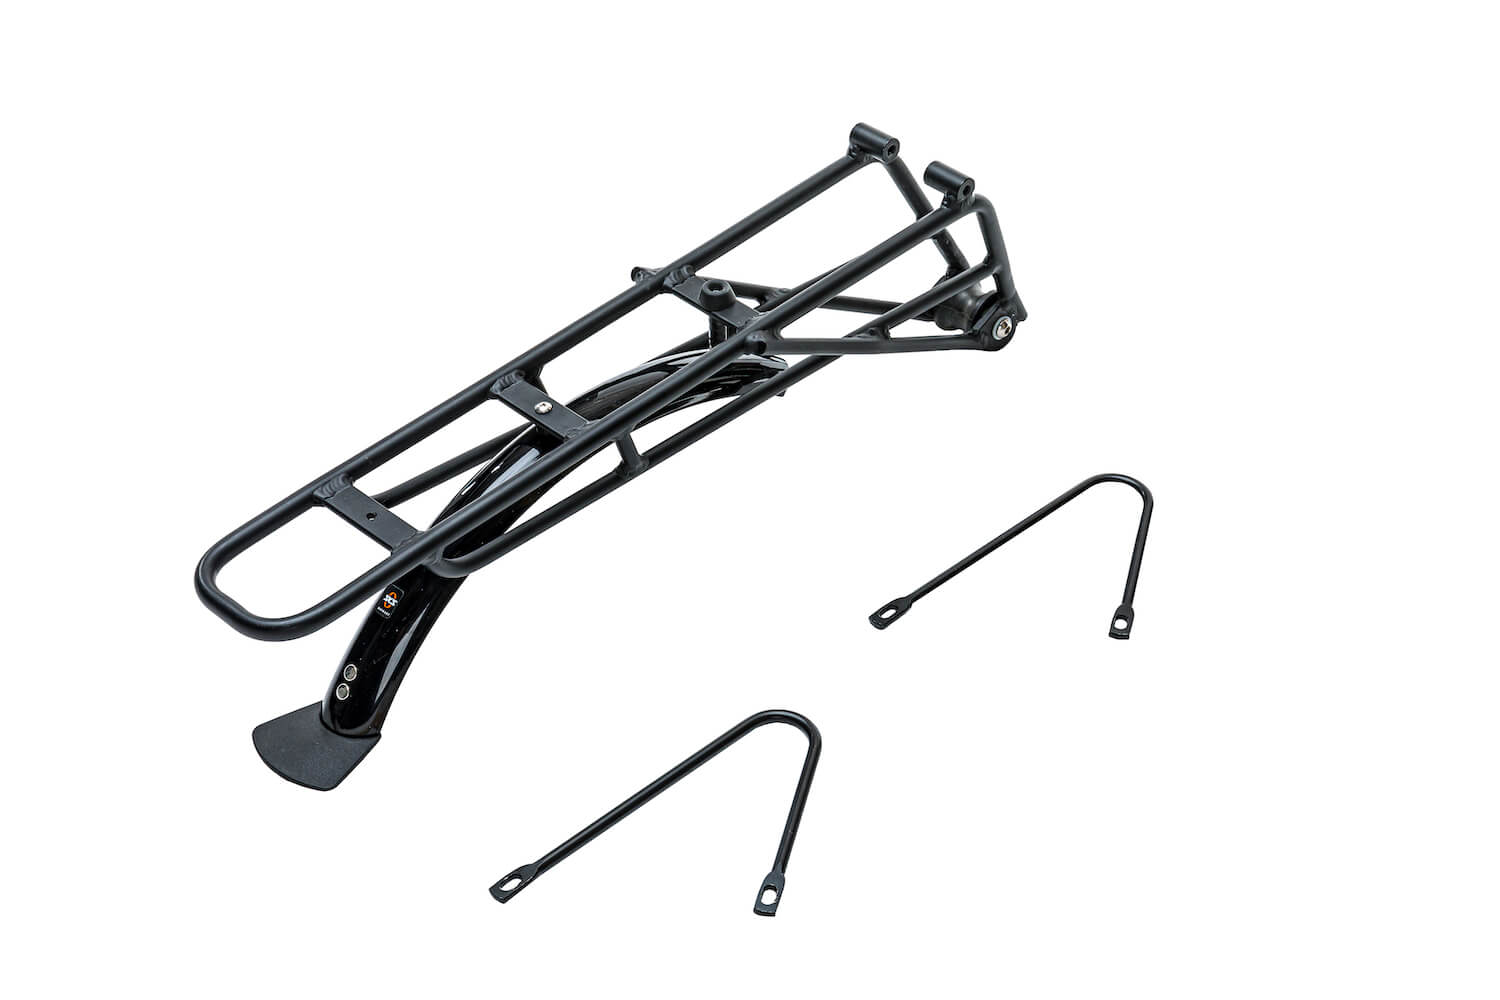 VELLO Foldable Rear Carrier Rack Details - Bike Basket Luggage Carrier for Folding Bikes